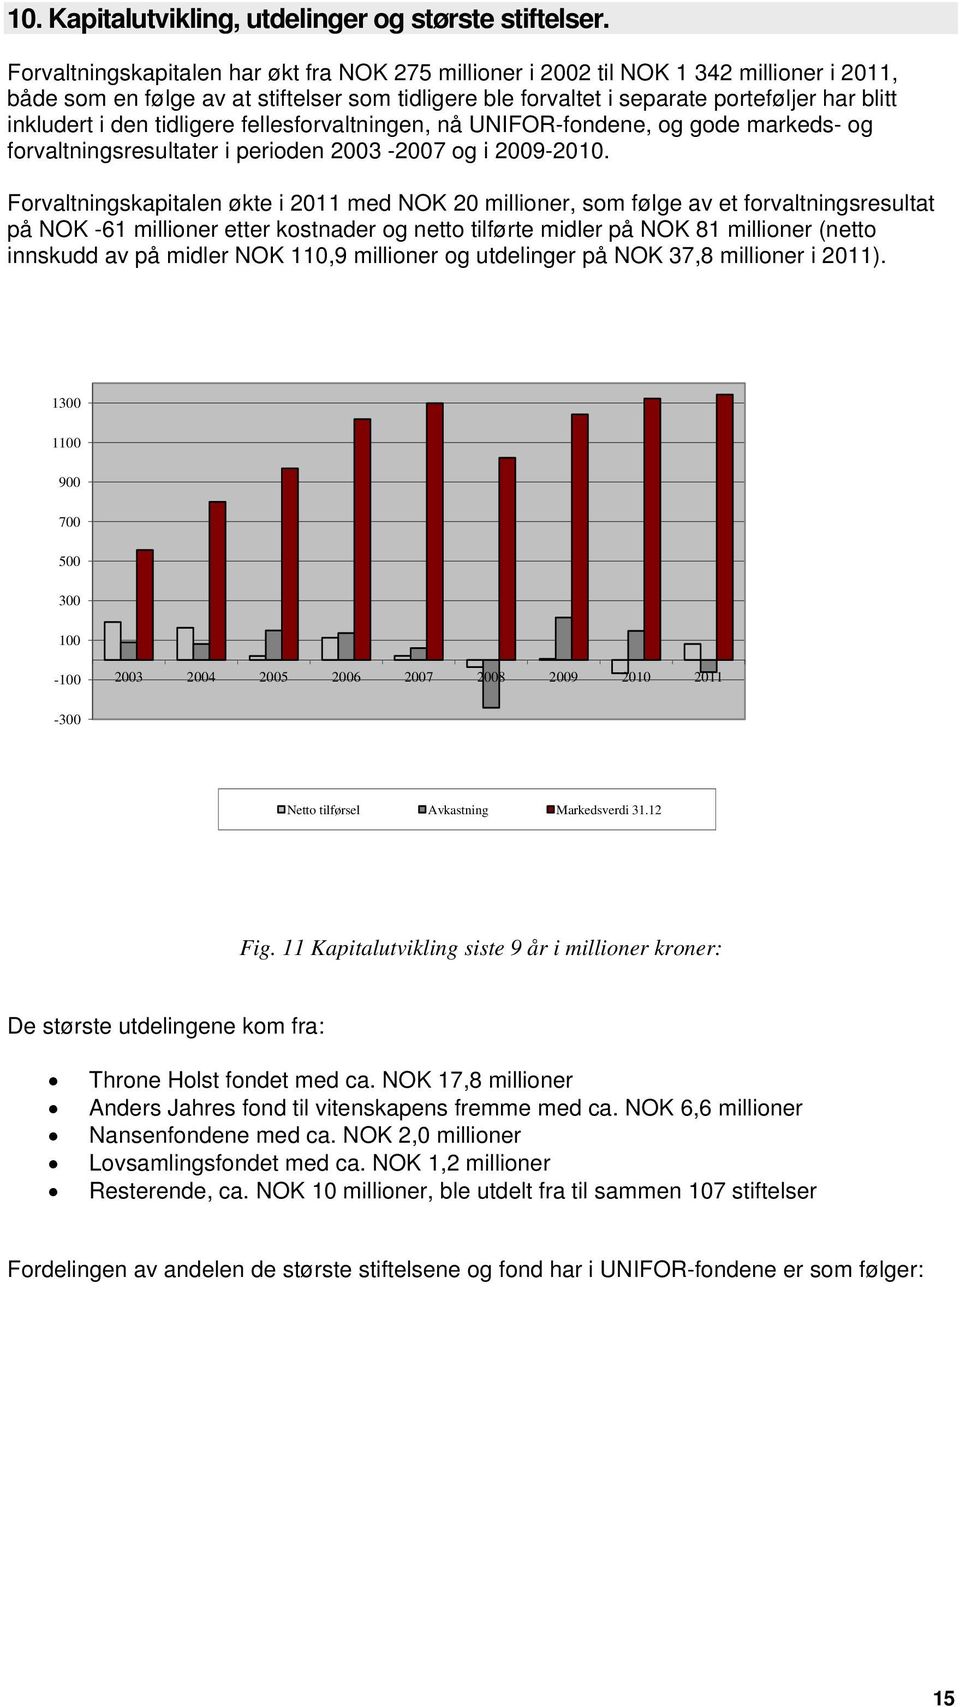 den tidligere fellesforvaltningen, nå UNIFOR-fondene, og gode markeds- og forvaltningsresultater i perioden 2003-2007 og i 2009-2010.